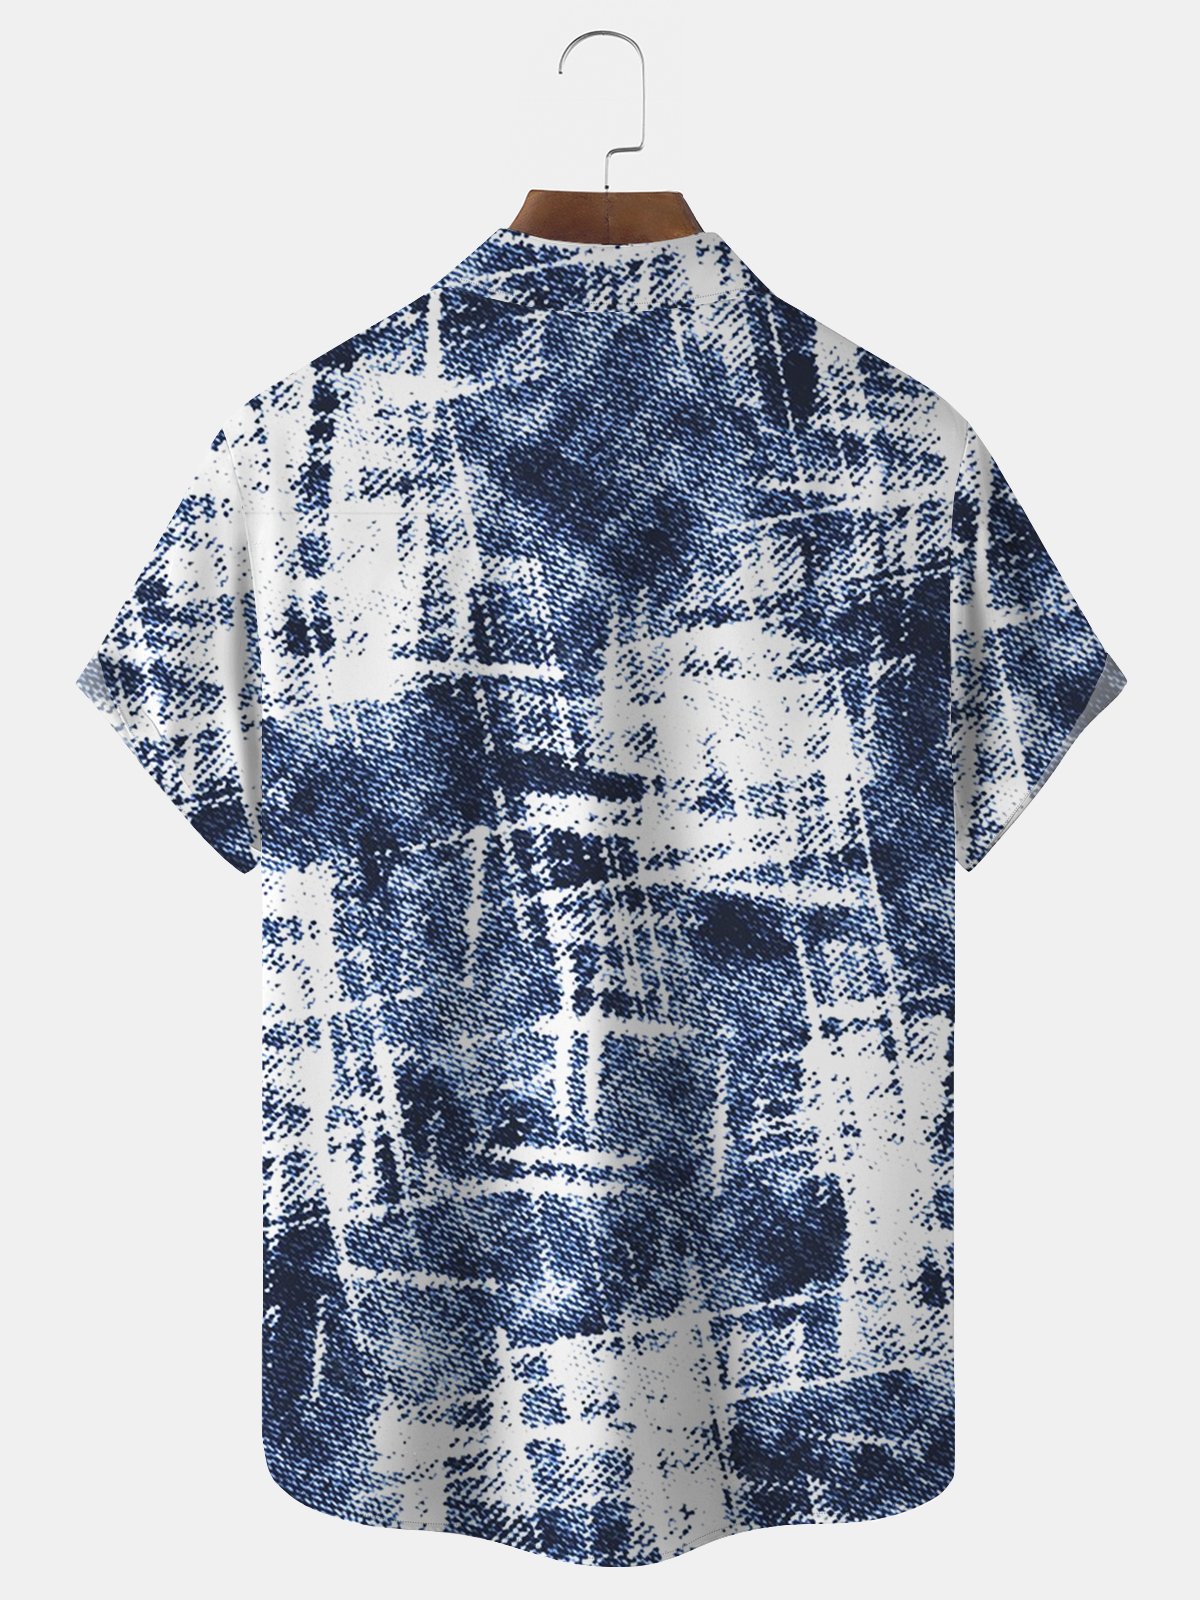 Royaura Abstract Textured Print Beach Men's Hawaiian Oversized Pocket Shirt